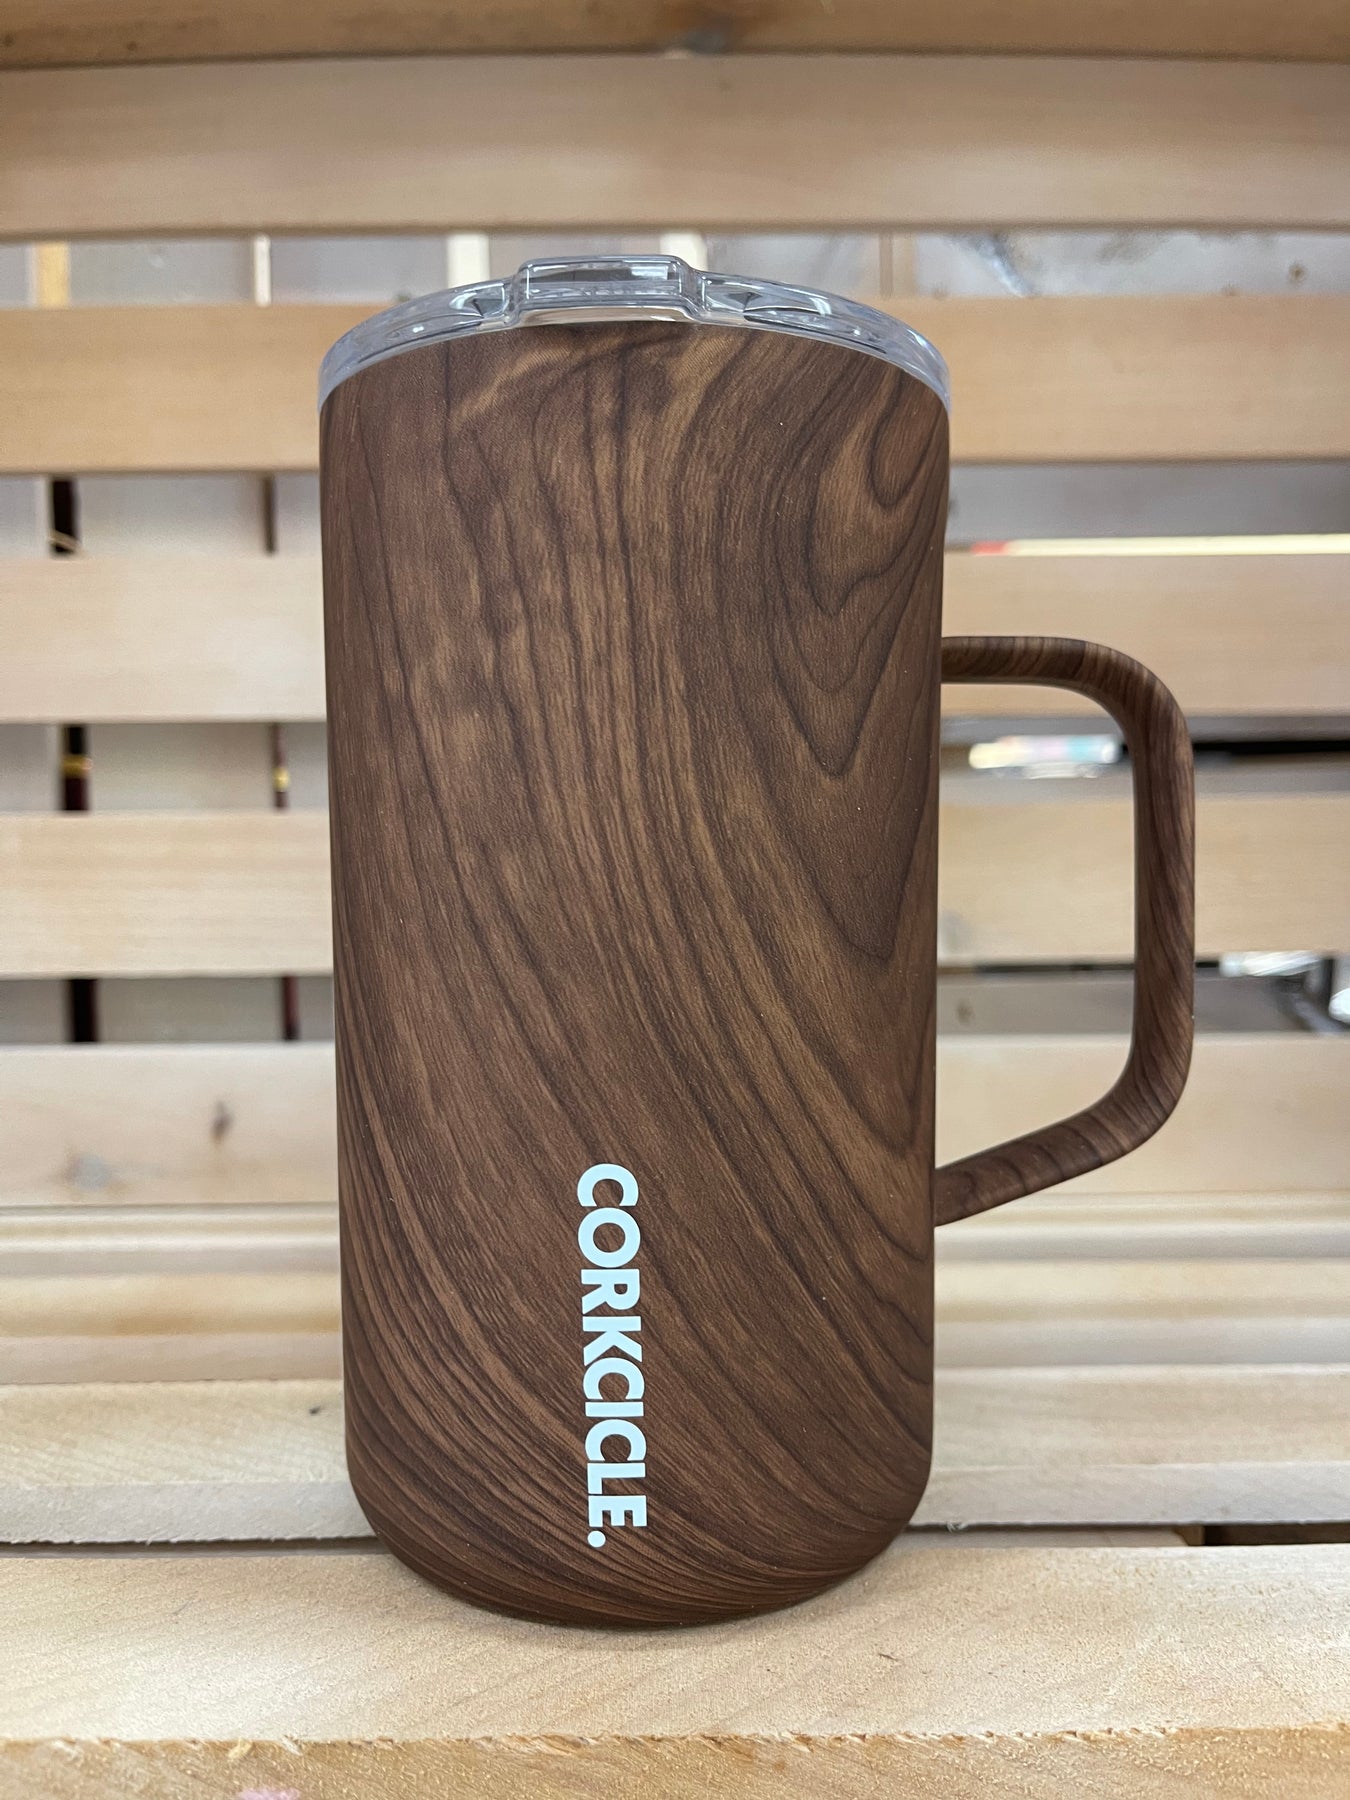 Corkcicle Coffee Mug - 16 oz Walnut Wood